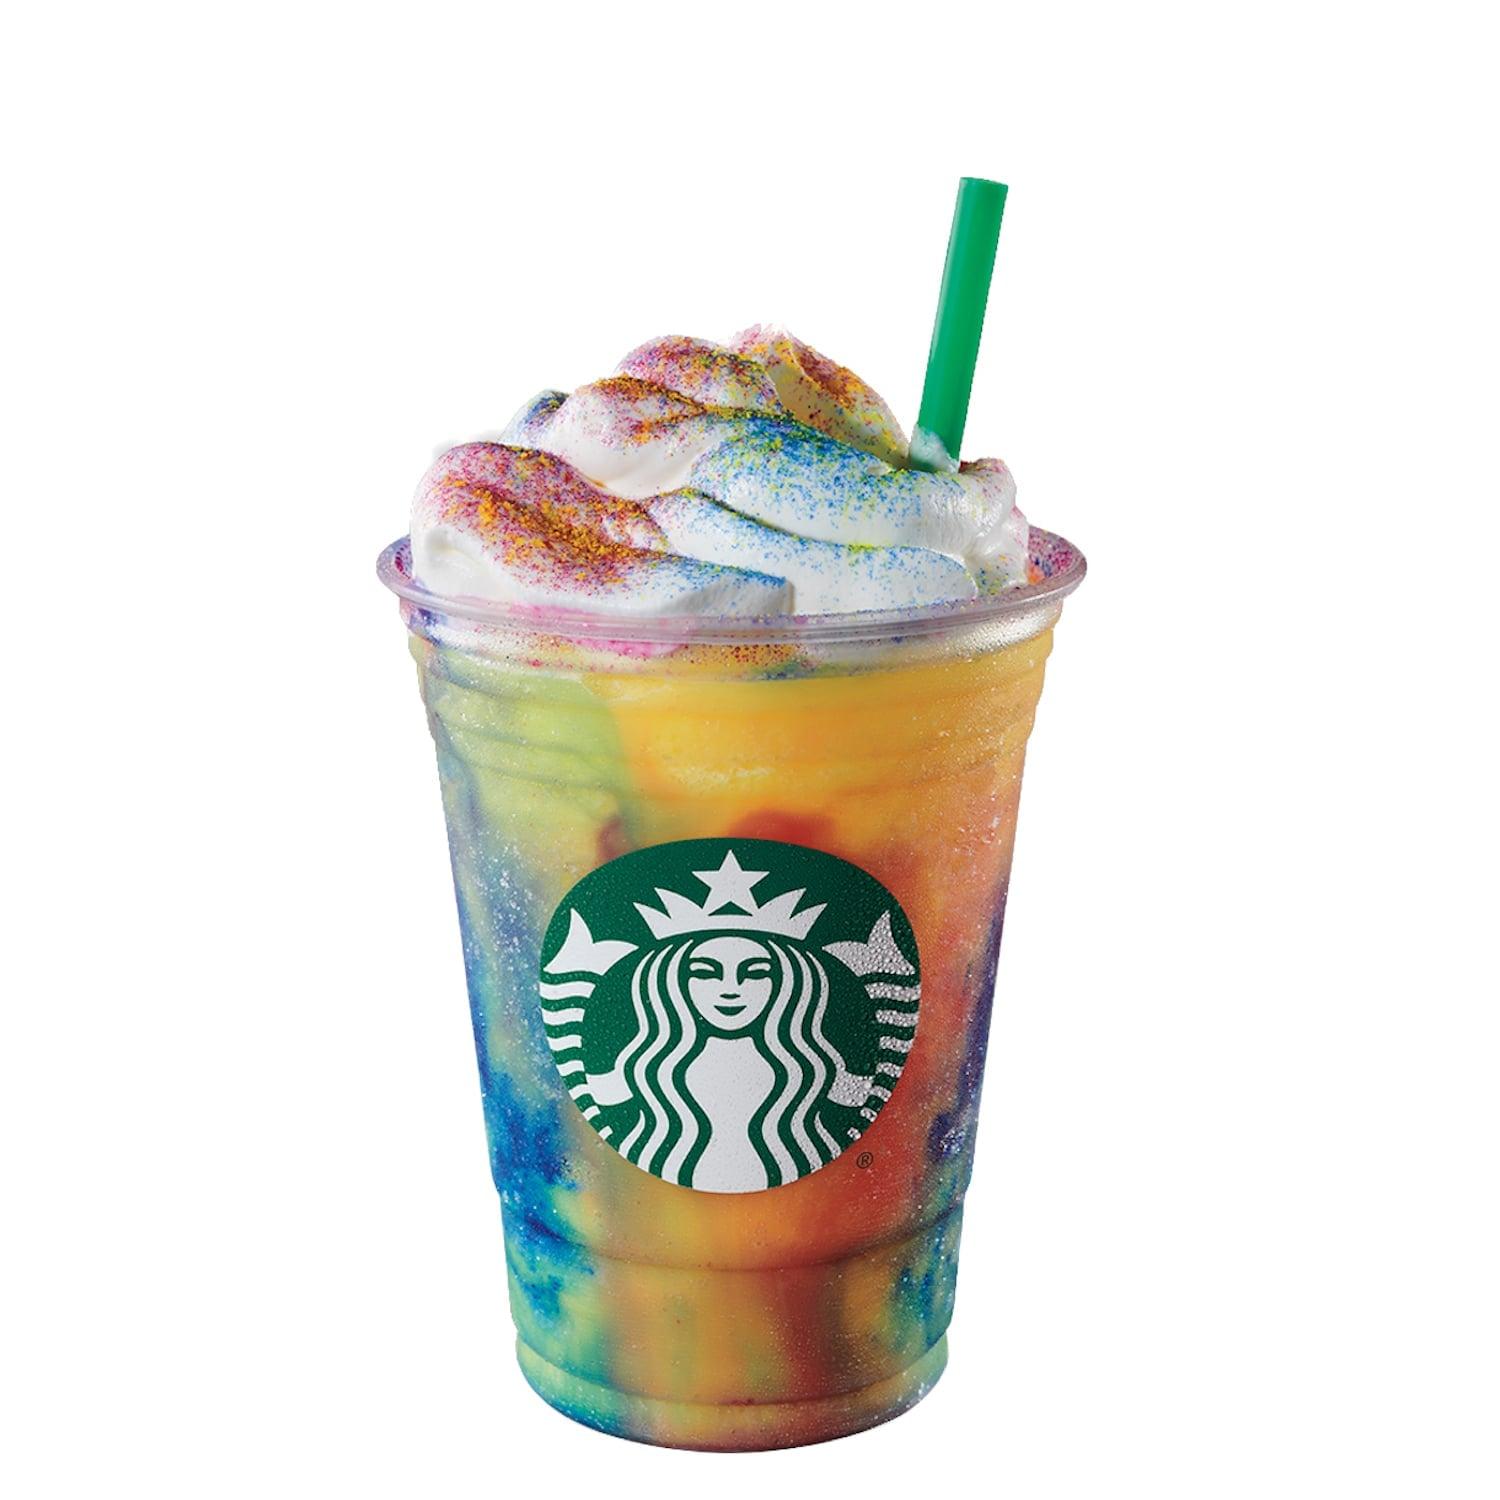 Starbucks Tie Dye Frappuccino 2019